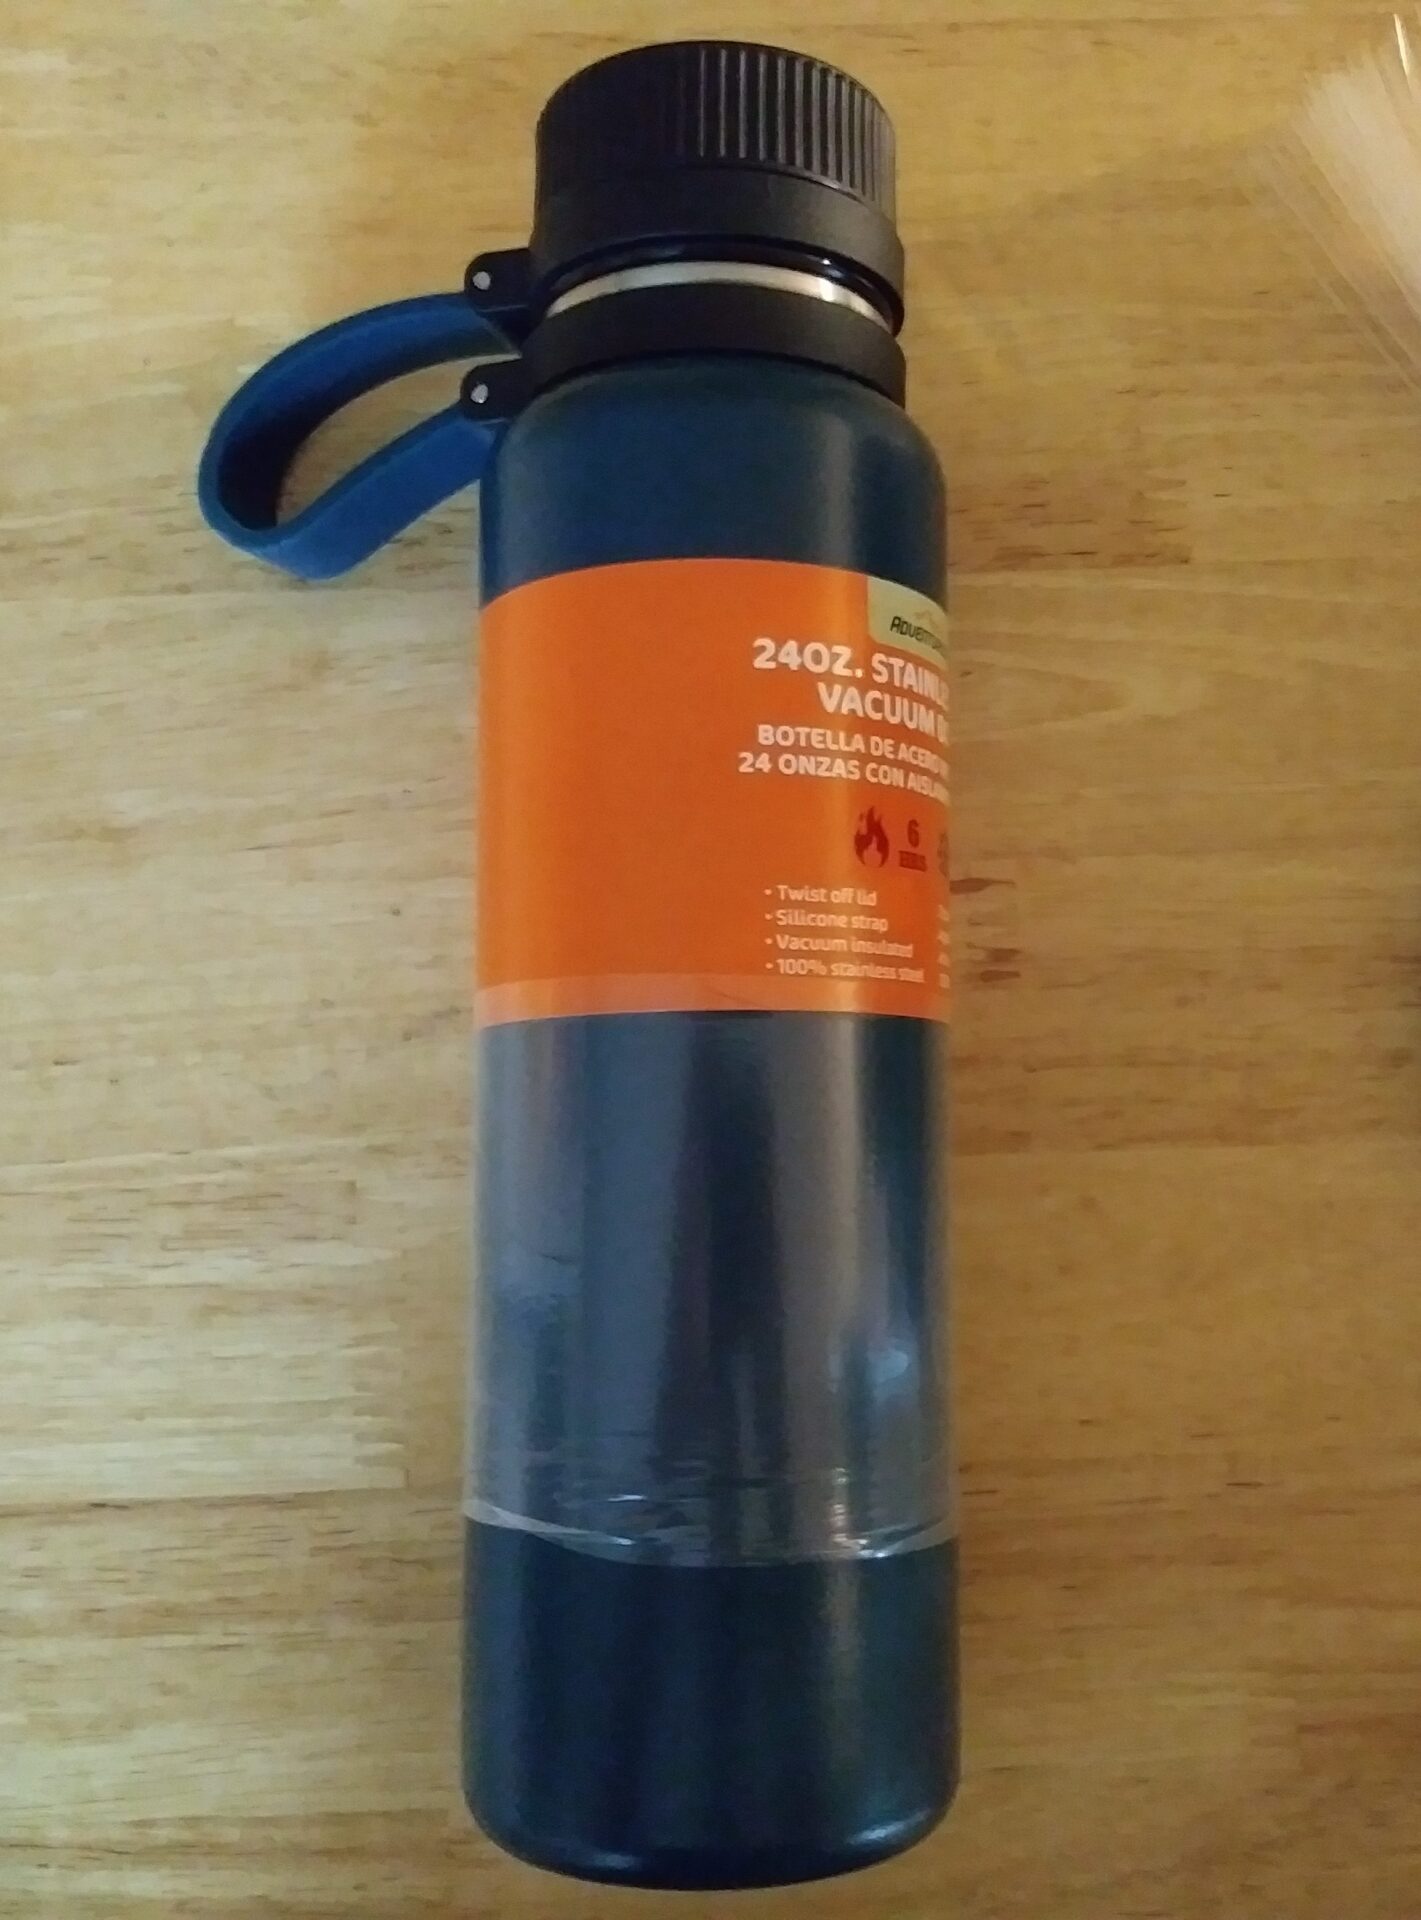 Crofton water bottle lid replacement? : r/aldi